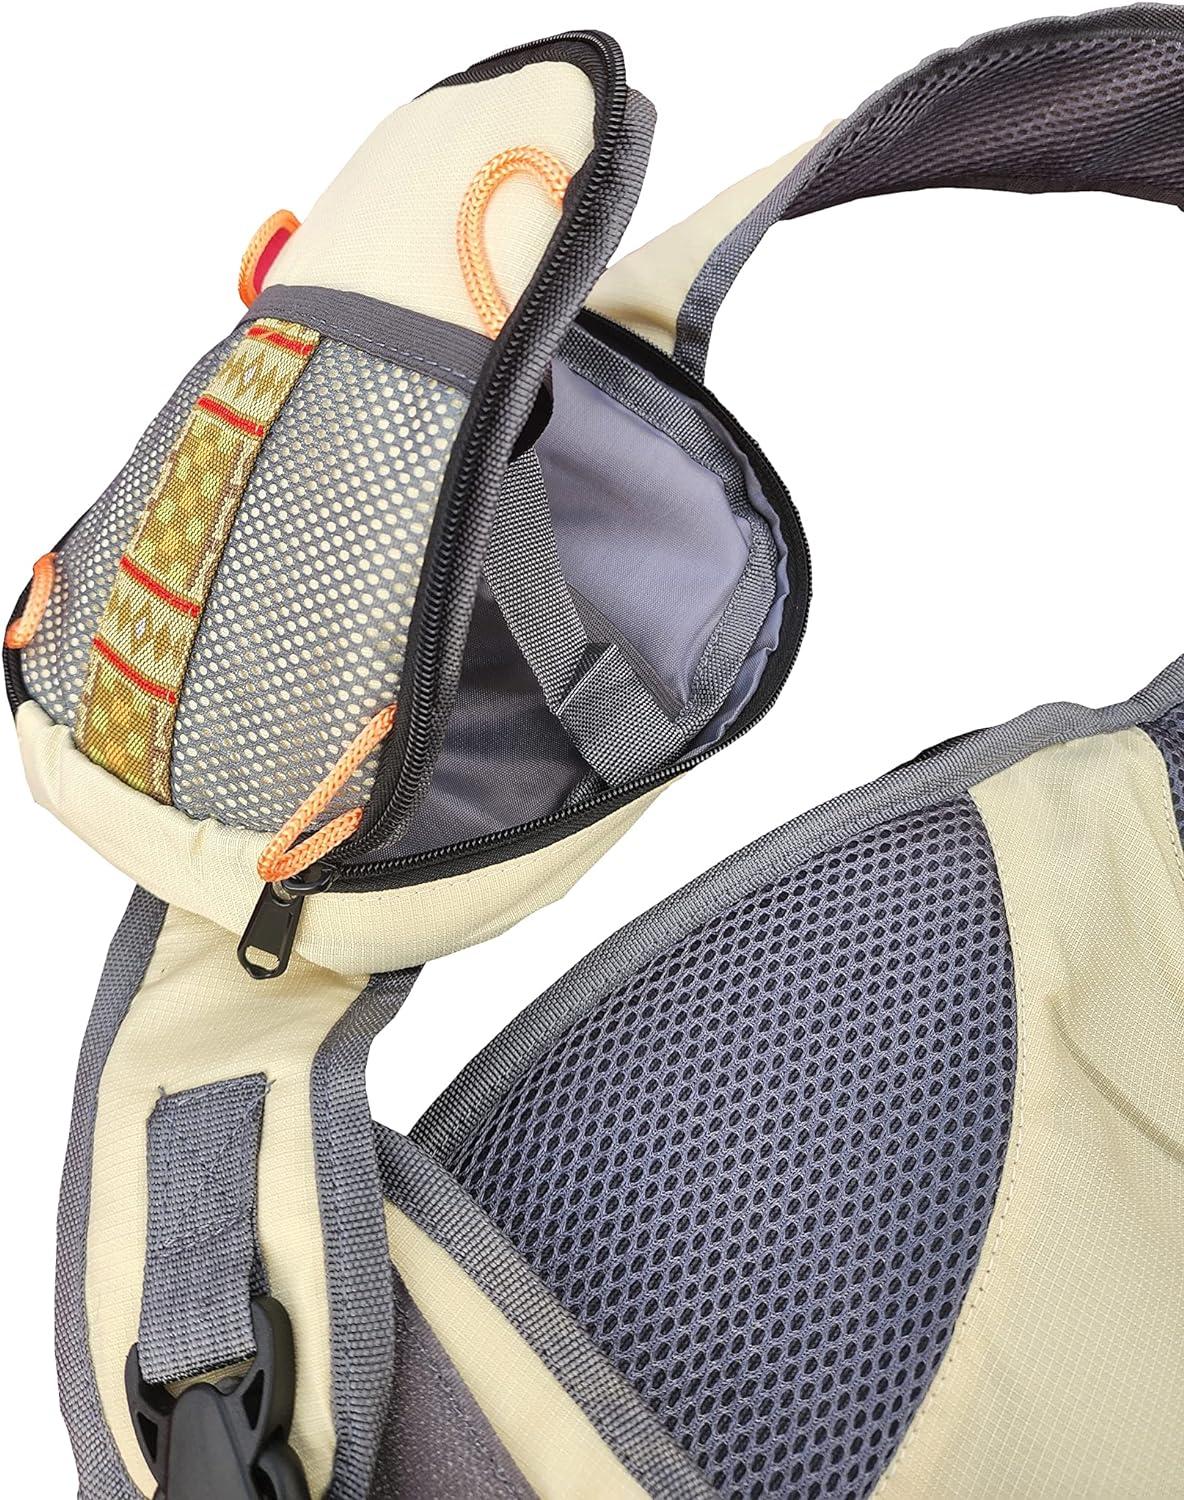 SUMATO Tenkara Sling Pack Quiver - Fly Fishing Vest for Men and